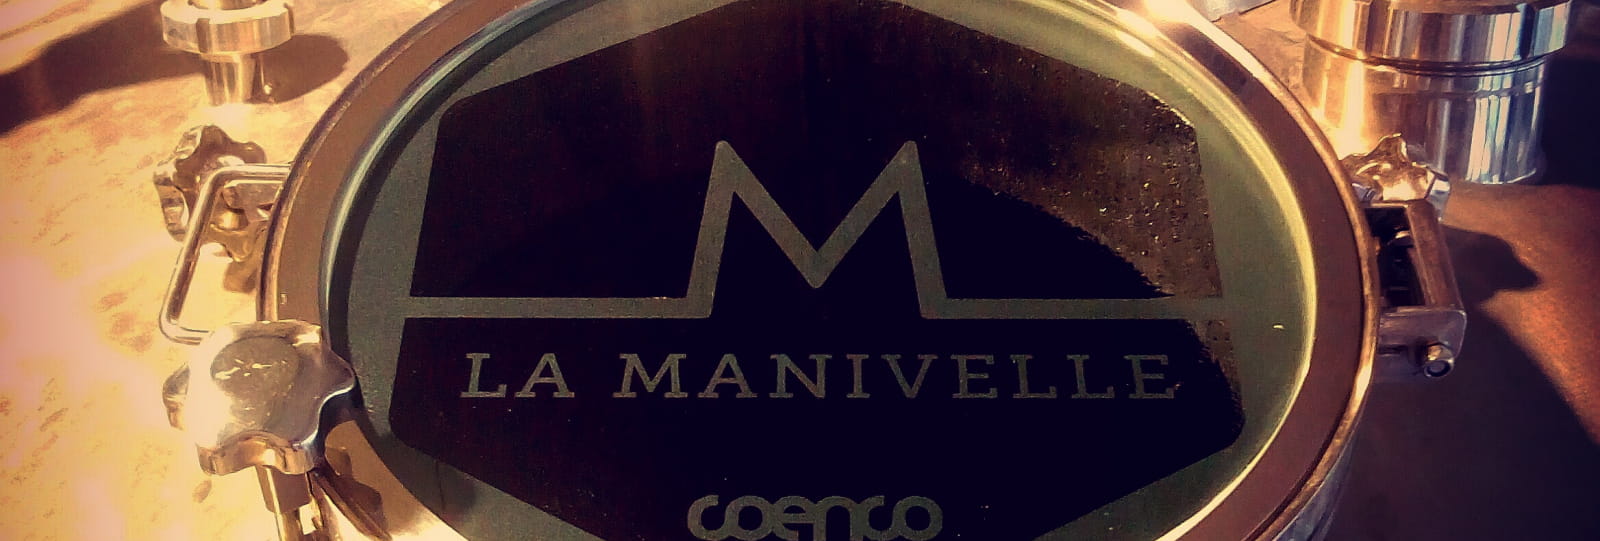 Bar La Manivelle